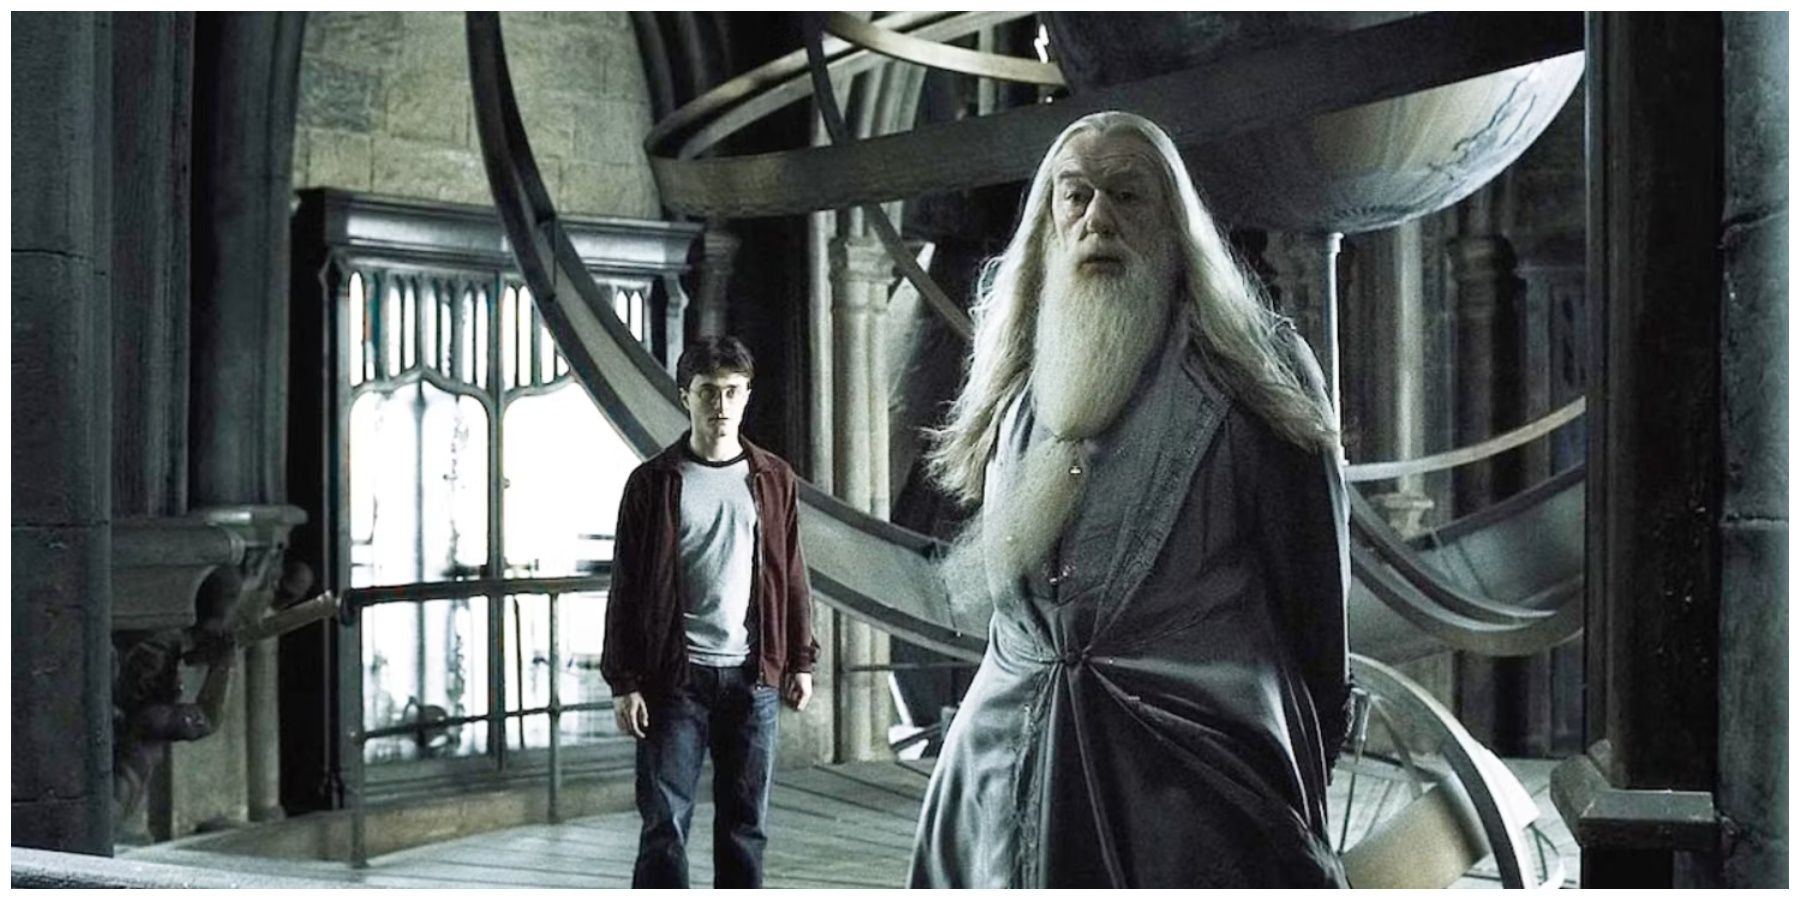 Daniel Radcliffe as Harry Potter. Michael Gambon as Albus Dumbledore.